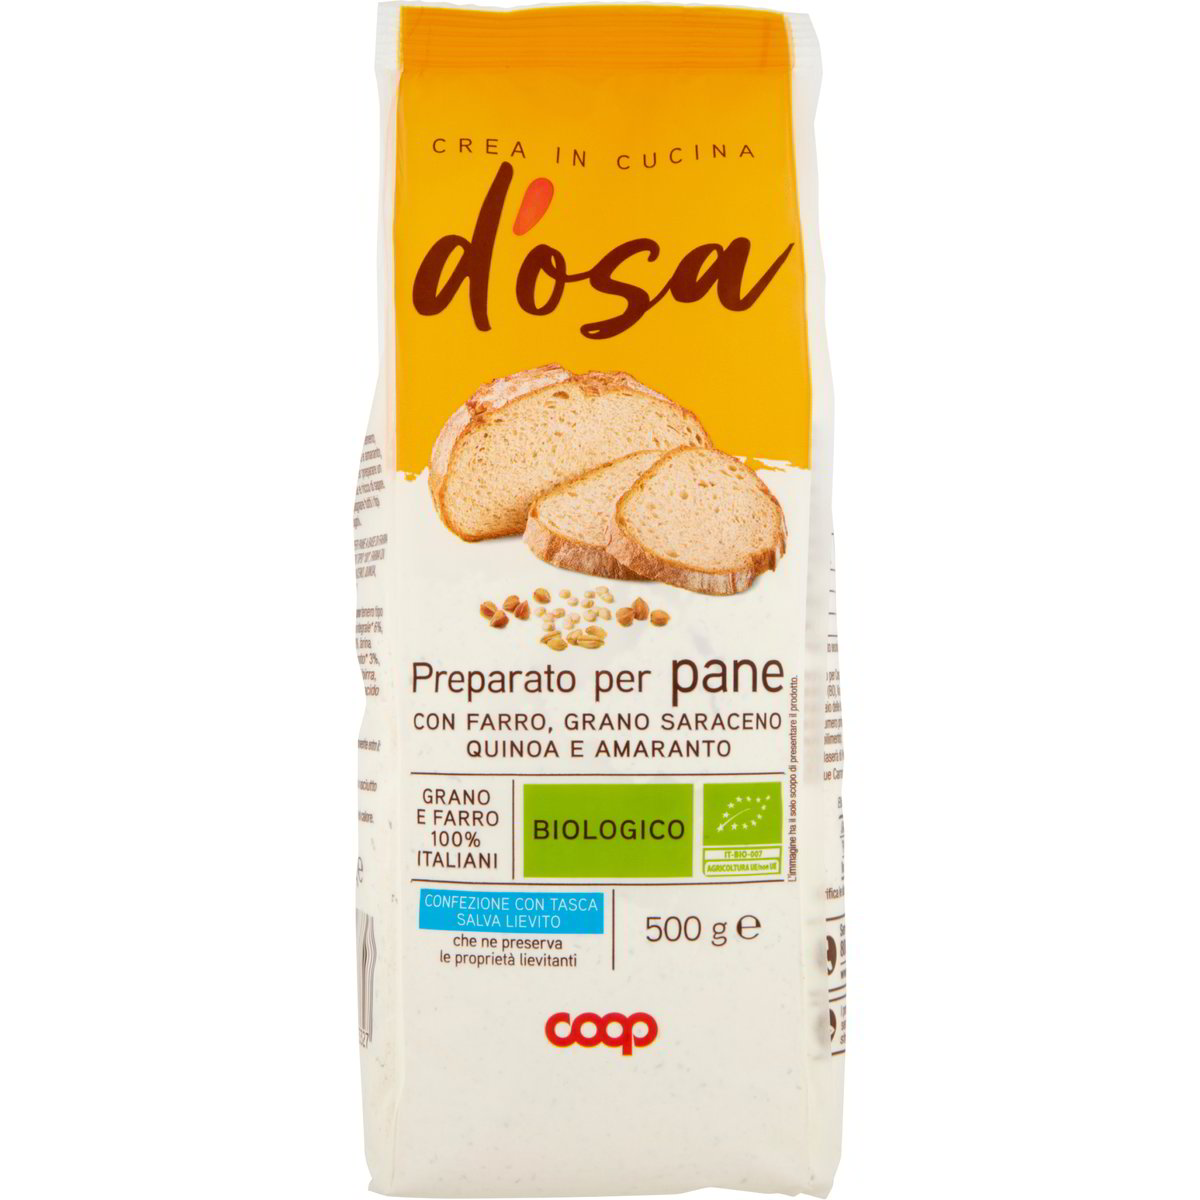 Preparato per pane COOP - D'OSA 500 G - Coop Shop